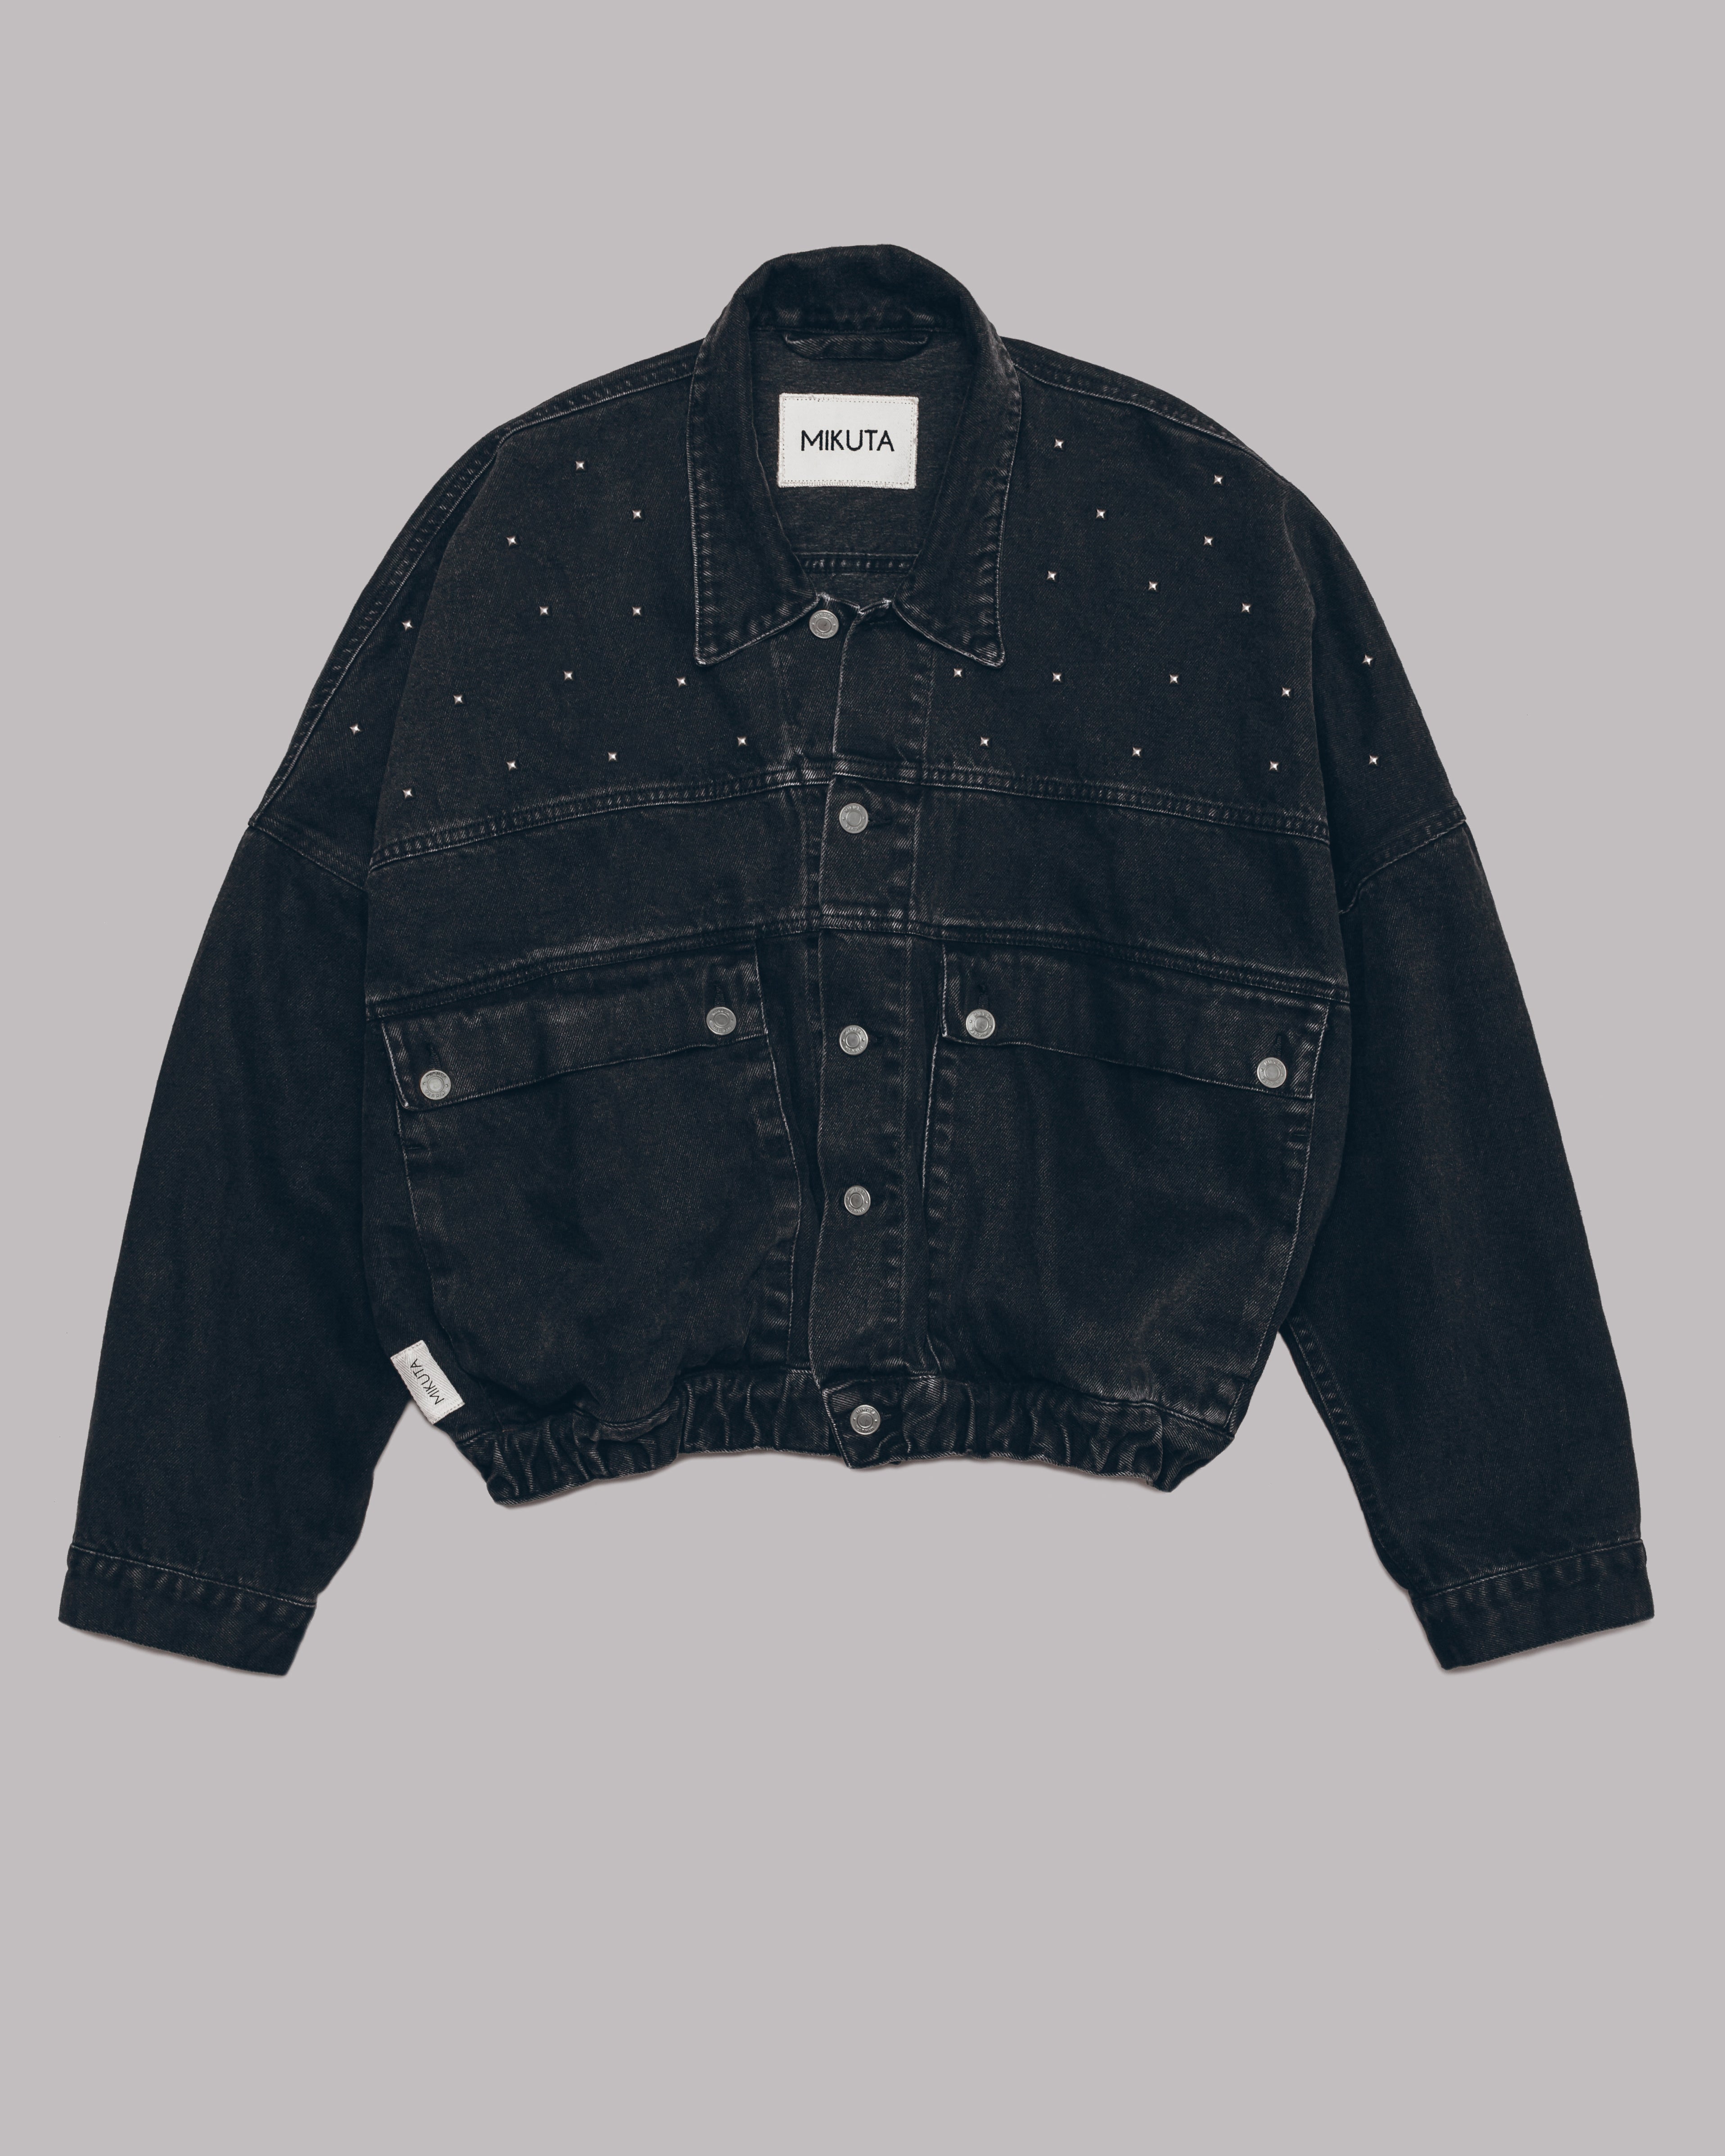 The Black Studded Denim Jacket – MIKUTA